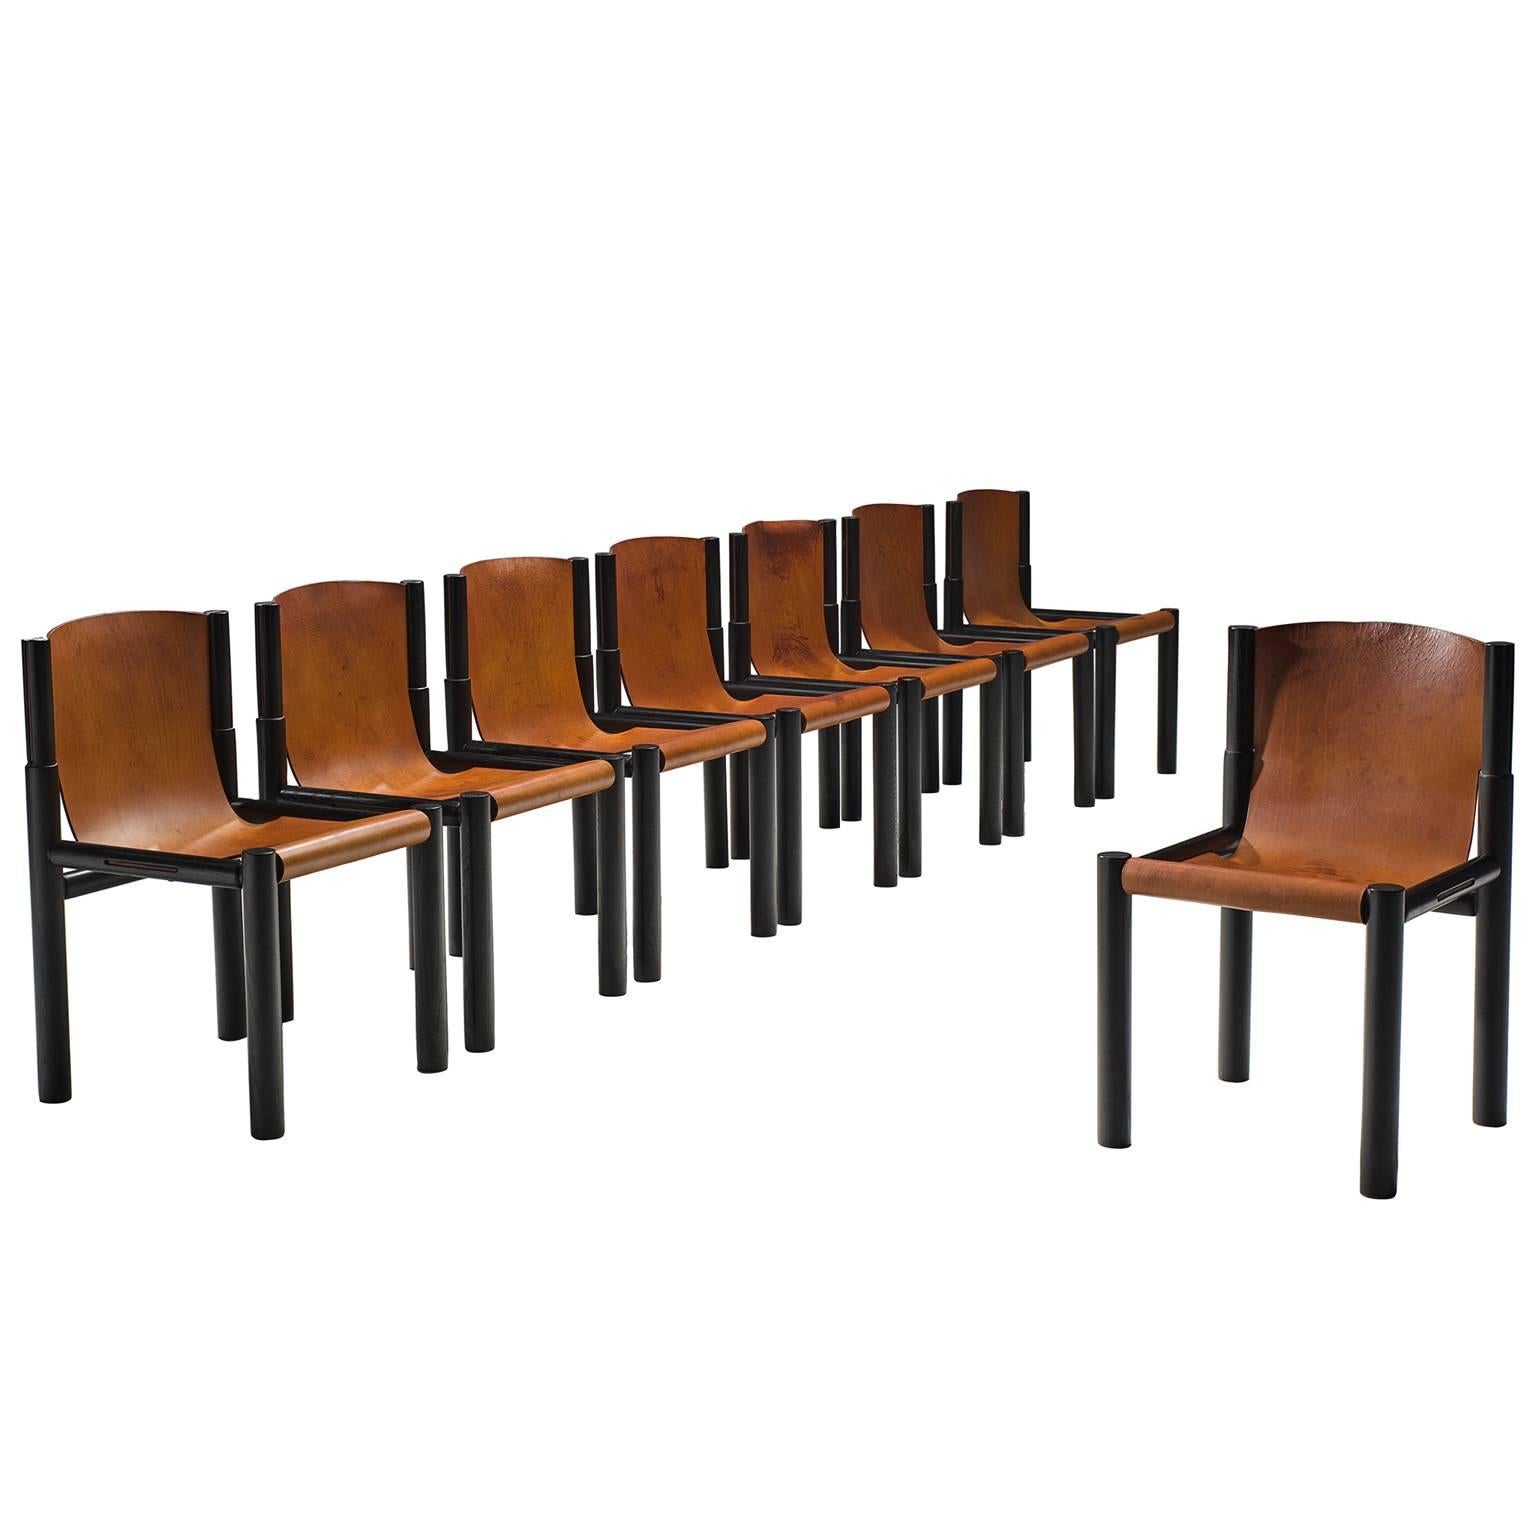 Pia Manu Original Patinated Cognac Leather Chairs